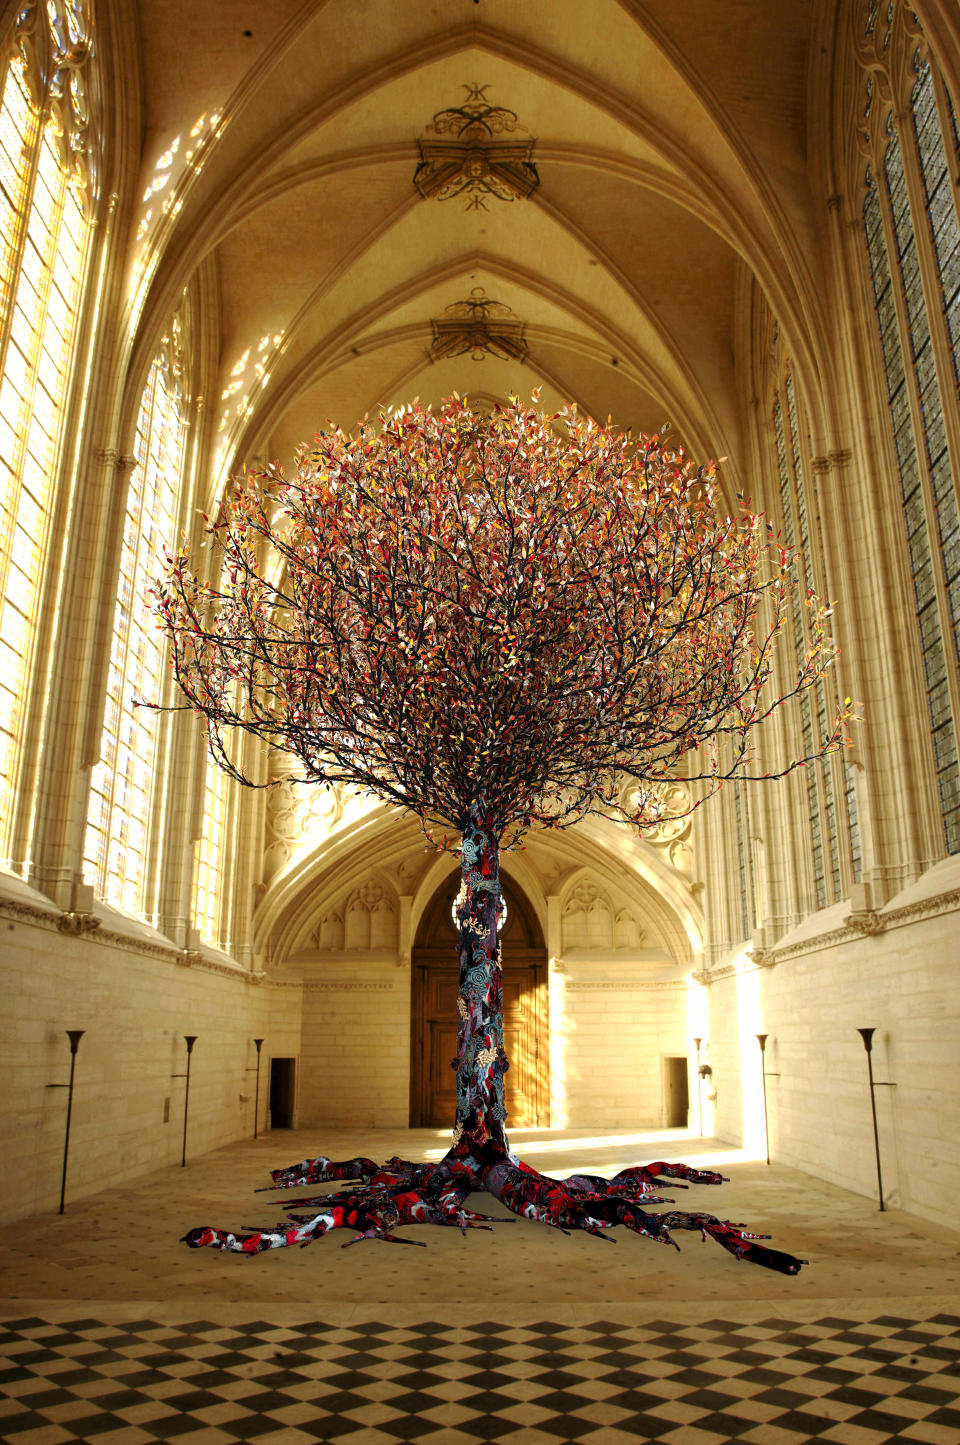 A 3D rendering of Joana Vasconcelos’ “Tree of Life installation” at the Sainte-Chapelle de Vincennes. - Credit: Courtesy of Atelier Joana Vasconcelos